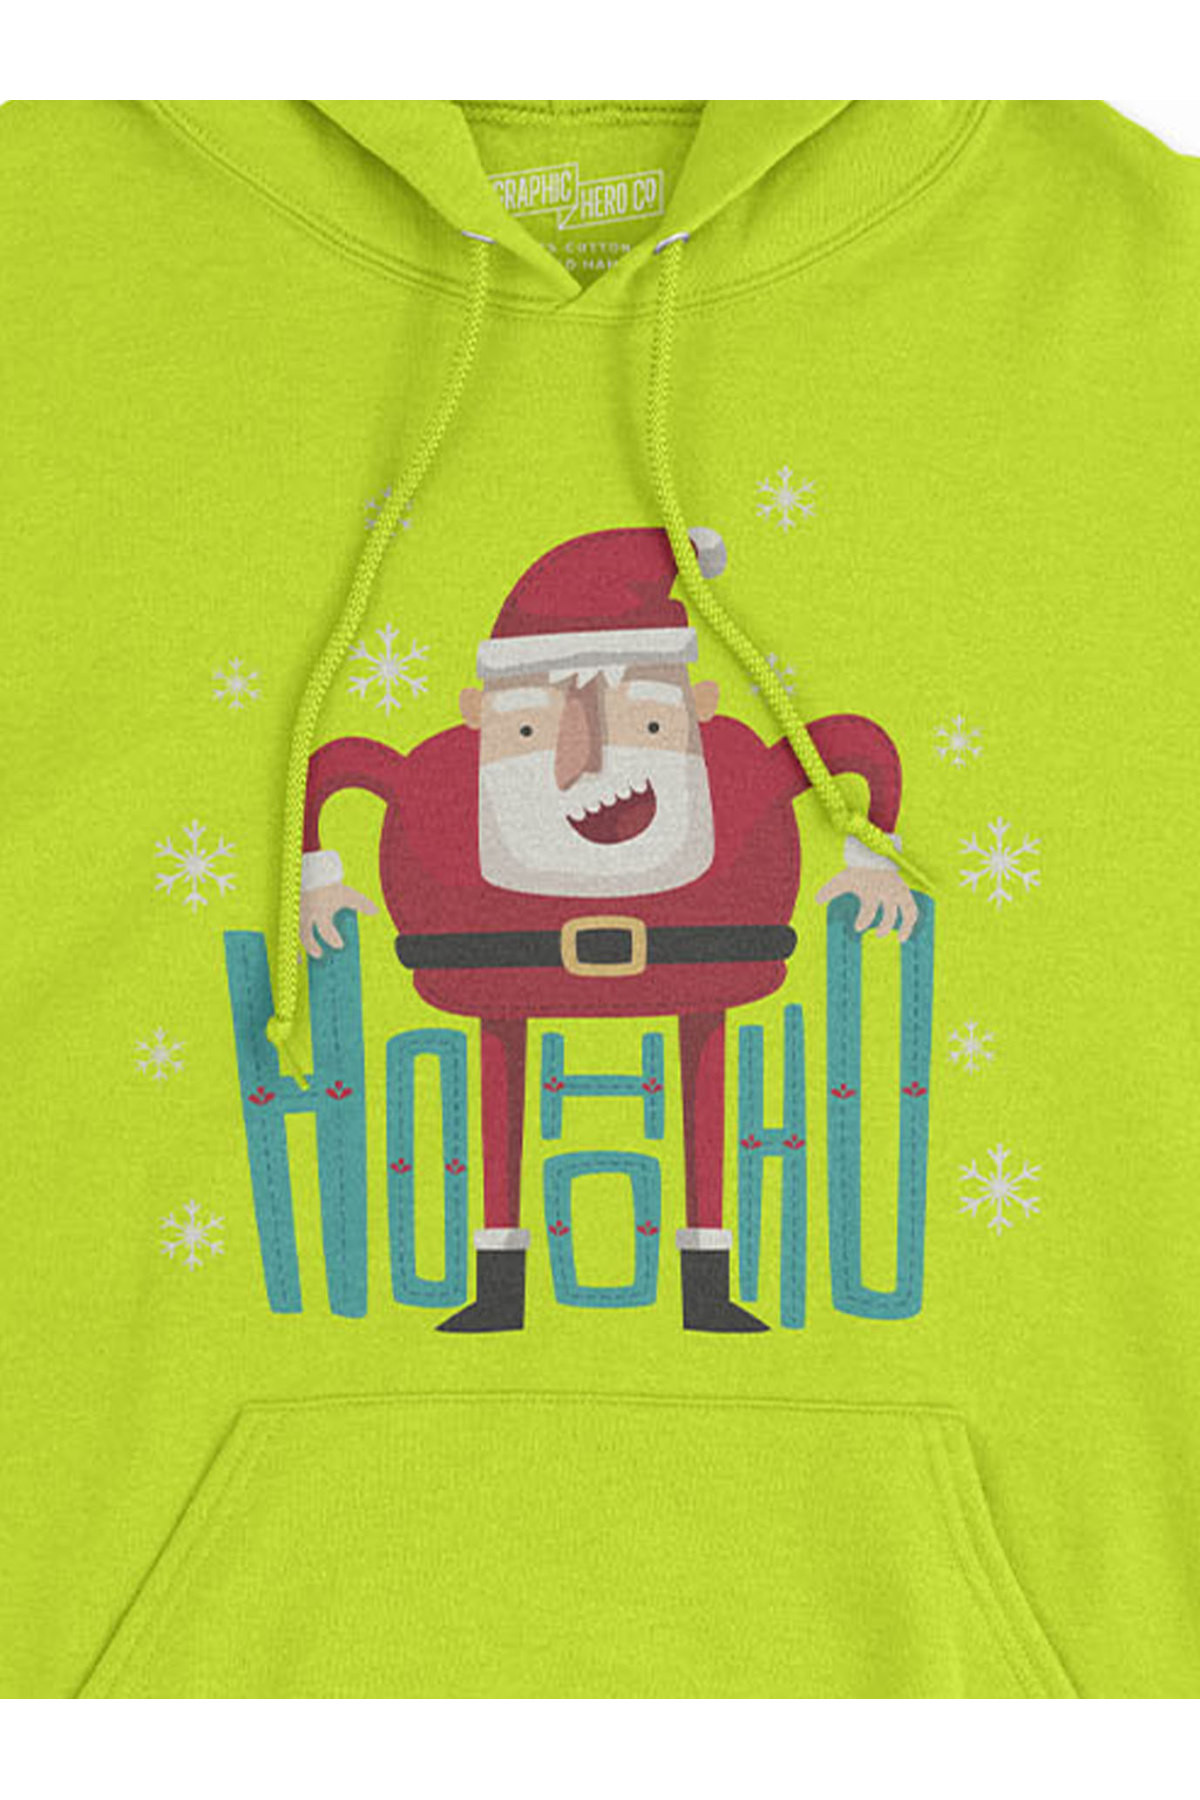 MIJUSTORE Noel Baba Yılbaşı Christmas Temalı 2 İplik Sweatshirt Hoodie